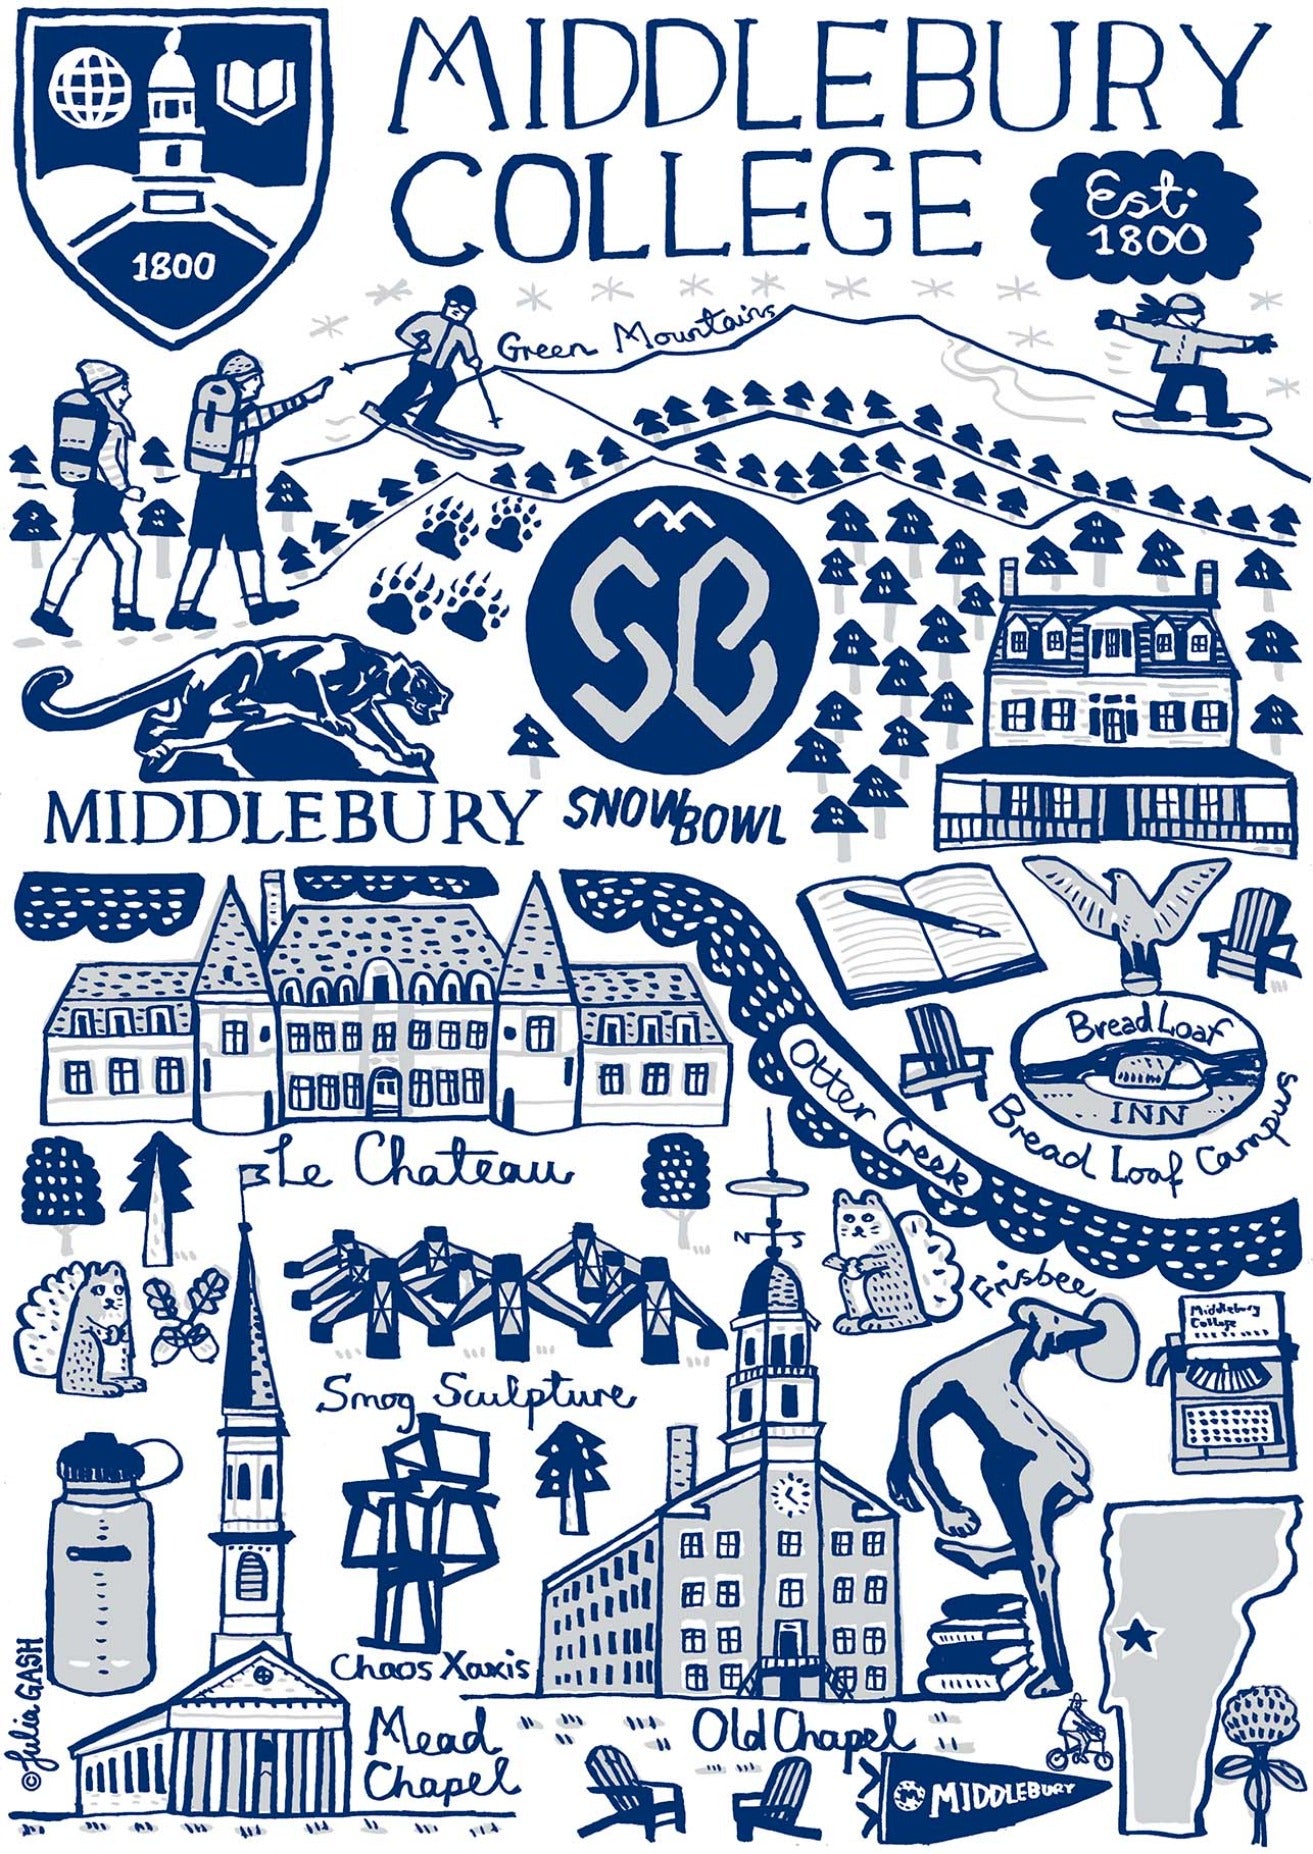 Middlebury College by Julia Gash